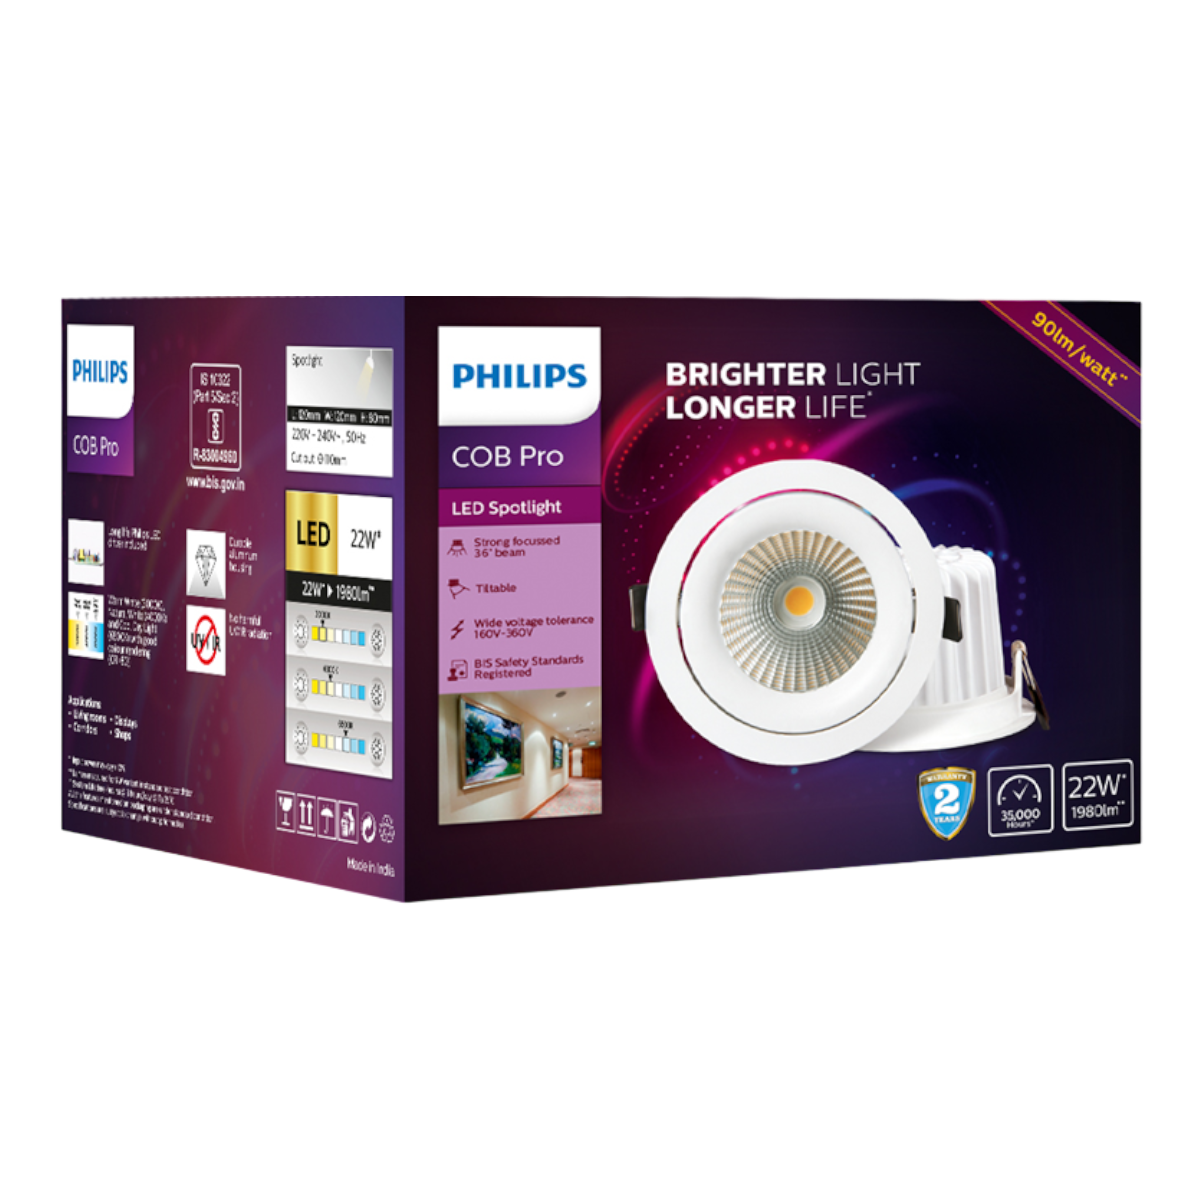 Buy Philips LED COB Pro Store Online Philips – lighting lighting | Philips